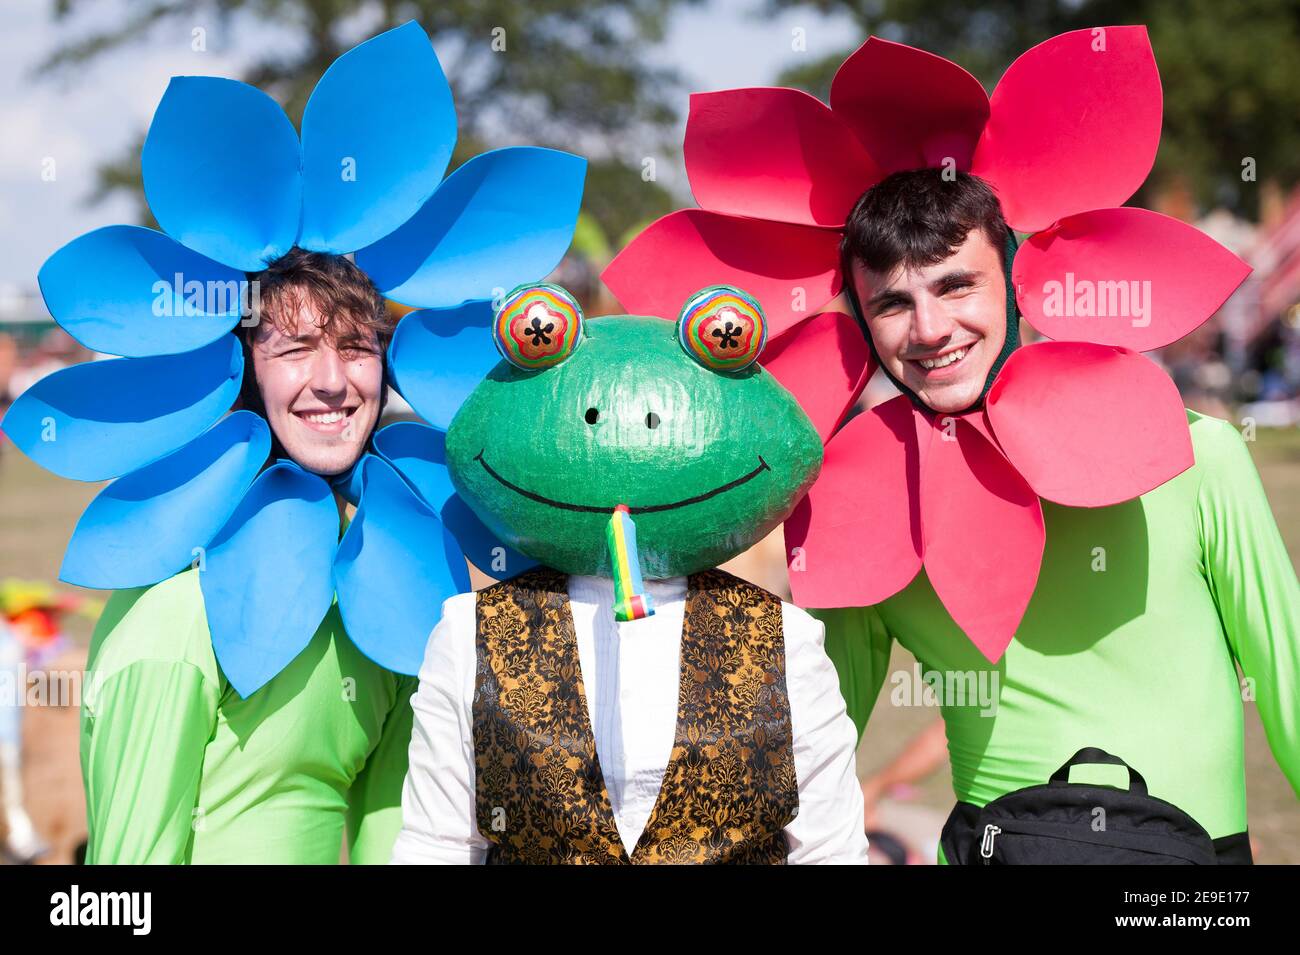 Festival goers in flower costume fancy dress enjoy the fine weather at Shambala Festival, Northamptonshire, UK Stock Photo